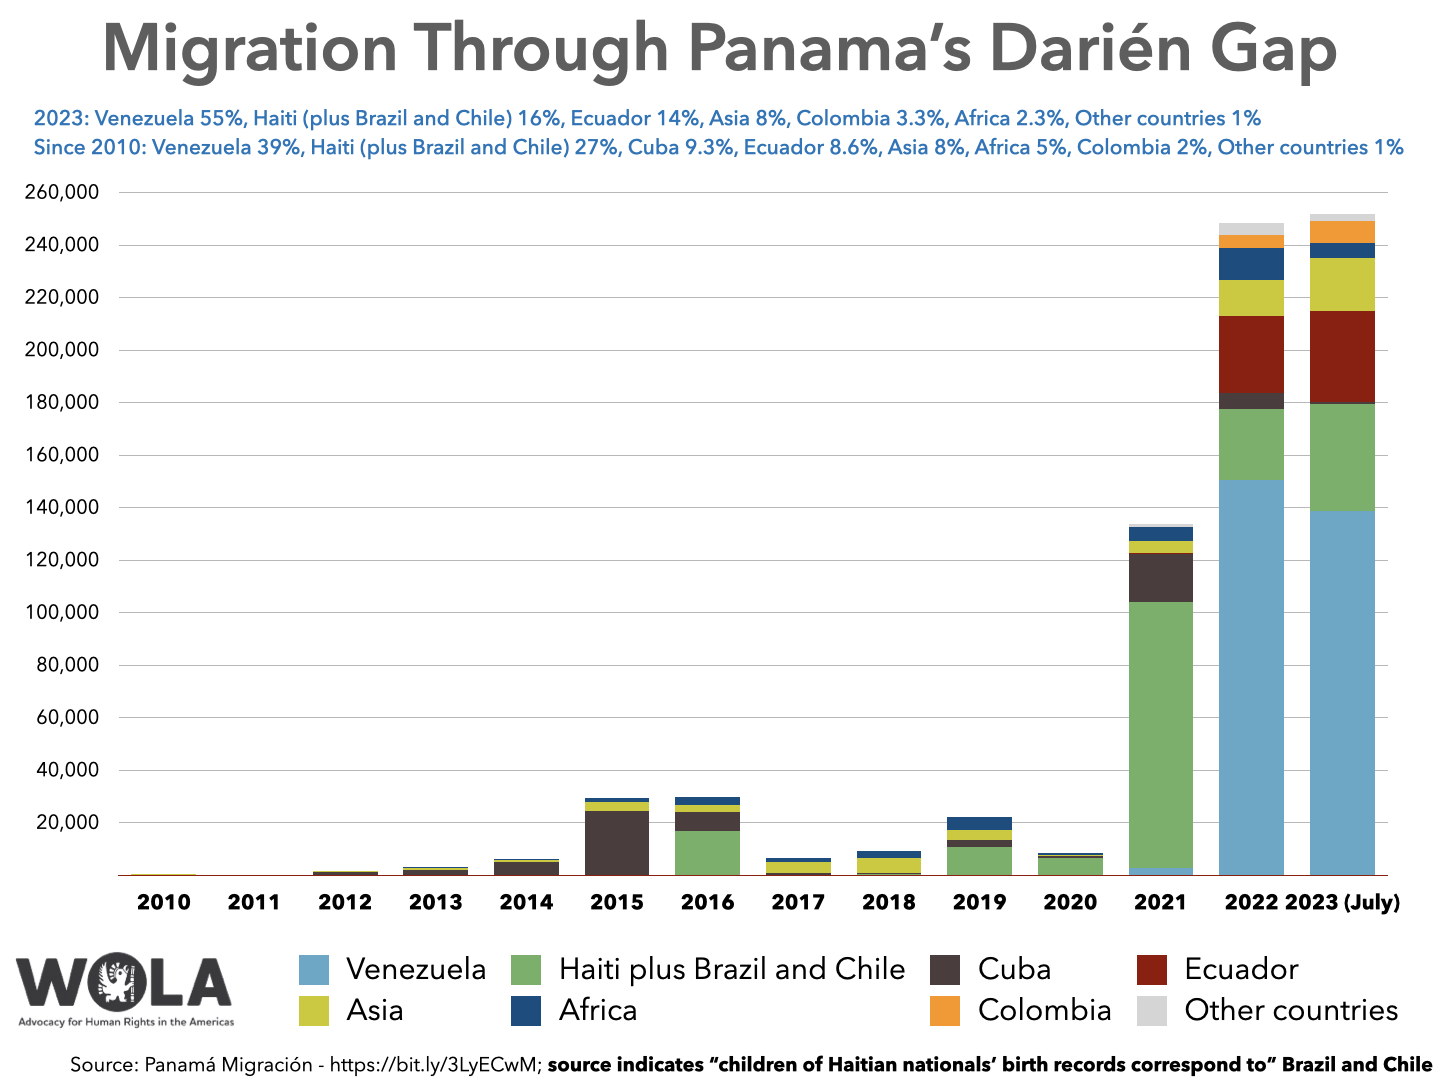 Chart: Annual Migration Through Panama’s Darién Gap 2023: Venezuela 55%, Haiti (plus Brazil and Chile) 16%, Ecuador 14%, Asia 8%, Colombia 3.3%, Africa 2.3%, Other countries 1% Since 2010: Venezuela 39%, Haiti (plus Brazil and Chile) 27%, Cuba 9.3%, Ecuador 8.6%, Asia 8%, Africa 5%, Colombia 2%, Other countries 1% 2010 2011 2012 2013 2014 2015 2016 2017 2018 2019 2020 2021 2022 2023 (July) Venezuela 0 0 0 0 0 2 6 18 65 78 50 2819 150327 138588 Haiti plus Brazil and Chile 0 1 0 2 1 7 16742 40 420 10490 6665 101072 27287 40967 Cuba 79 18 1154 2010 5026 24623 7383 736 329 2691 528 18600 5961 528 Ecuador 0 15 18 4 1 14 93 50 51 31 25 387 29356 34894 Asia 401 79 403 732 872 3260 2485 4108 5809 3835 542 4531 13664 20238 Africa 79 62 178 251 257 1326 3277 1754 2512 4932 744 5064 12168 5689 Colombia 0 65 24 26 9 32 16 36 13 23 18 169 5064 8287 Other countries 1 43 0 26 9 25 53 38 23 22 22 1084 4457 2567